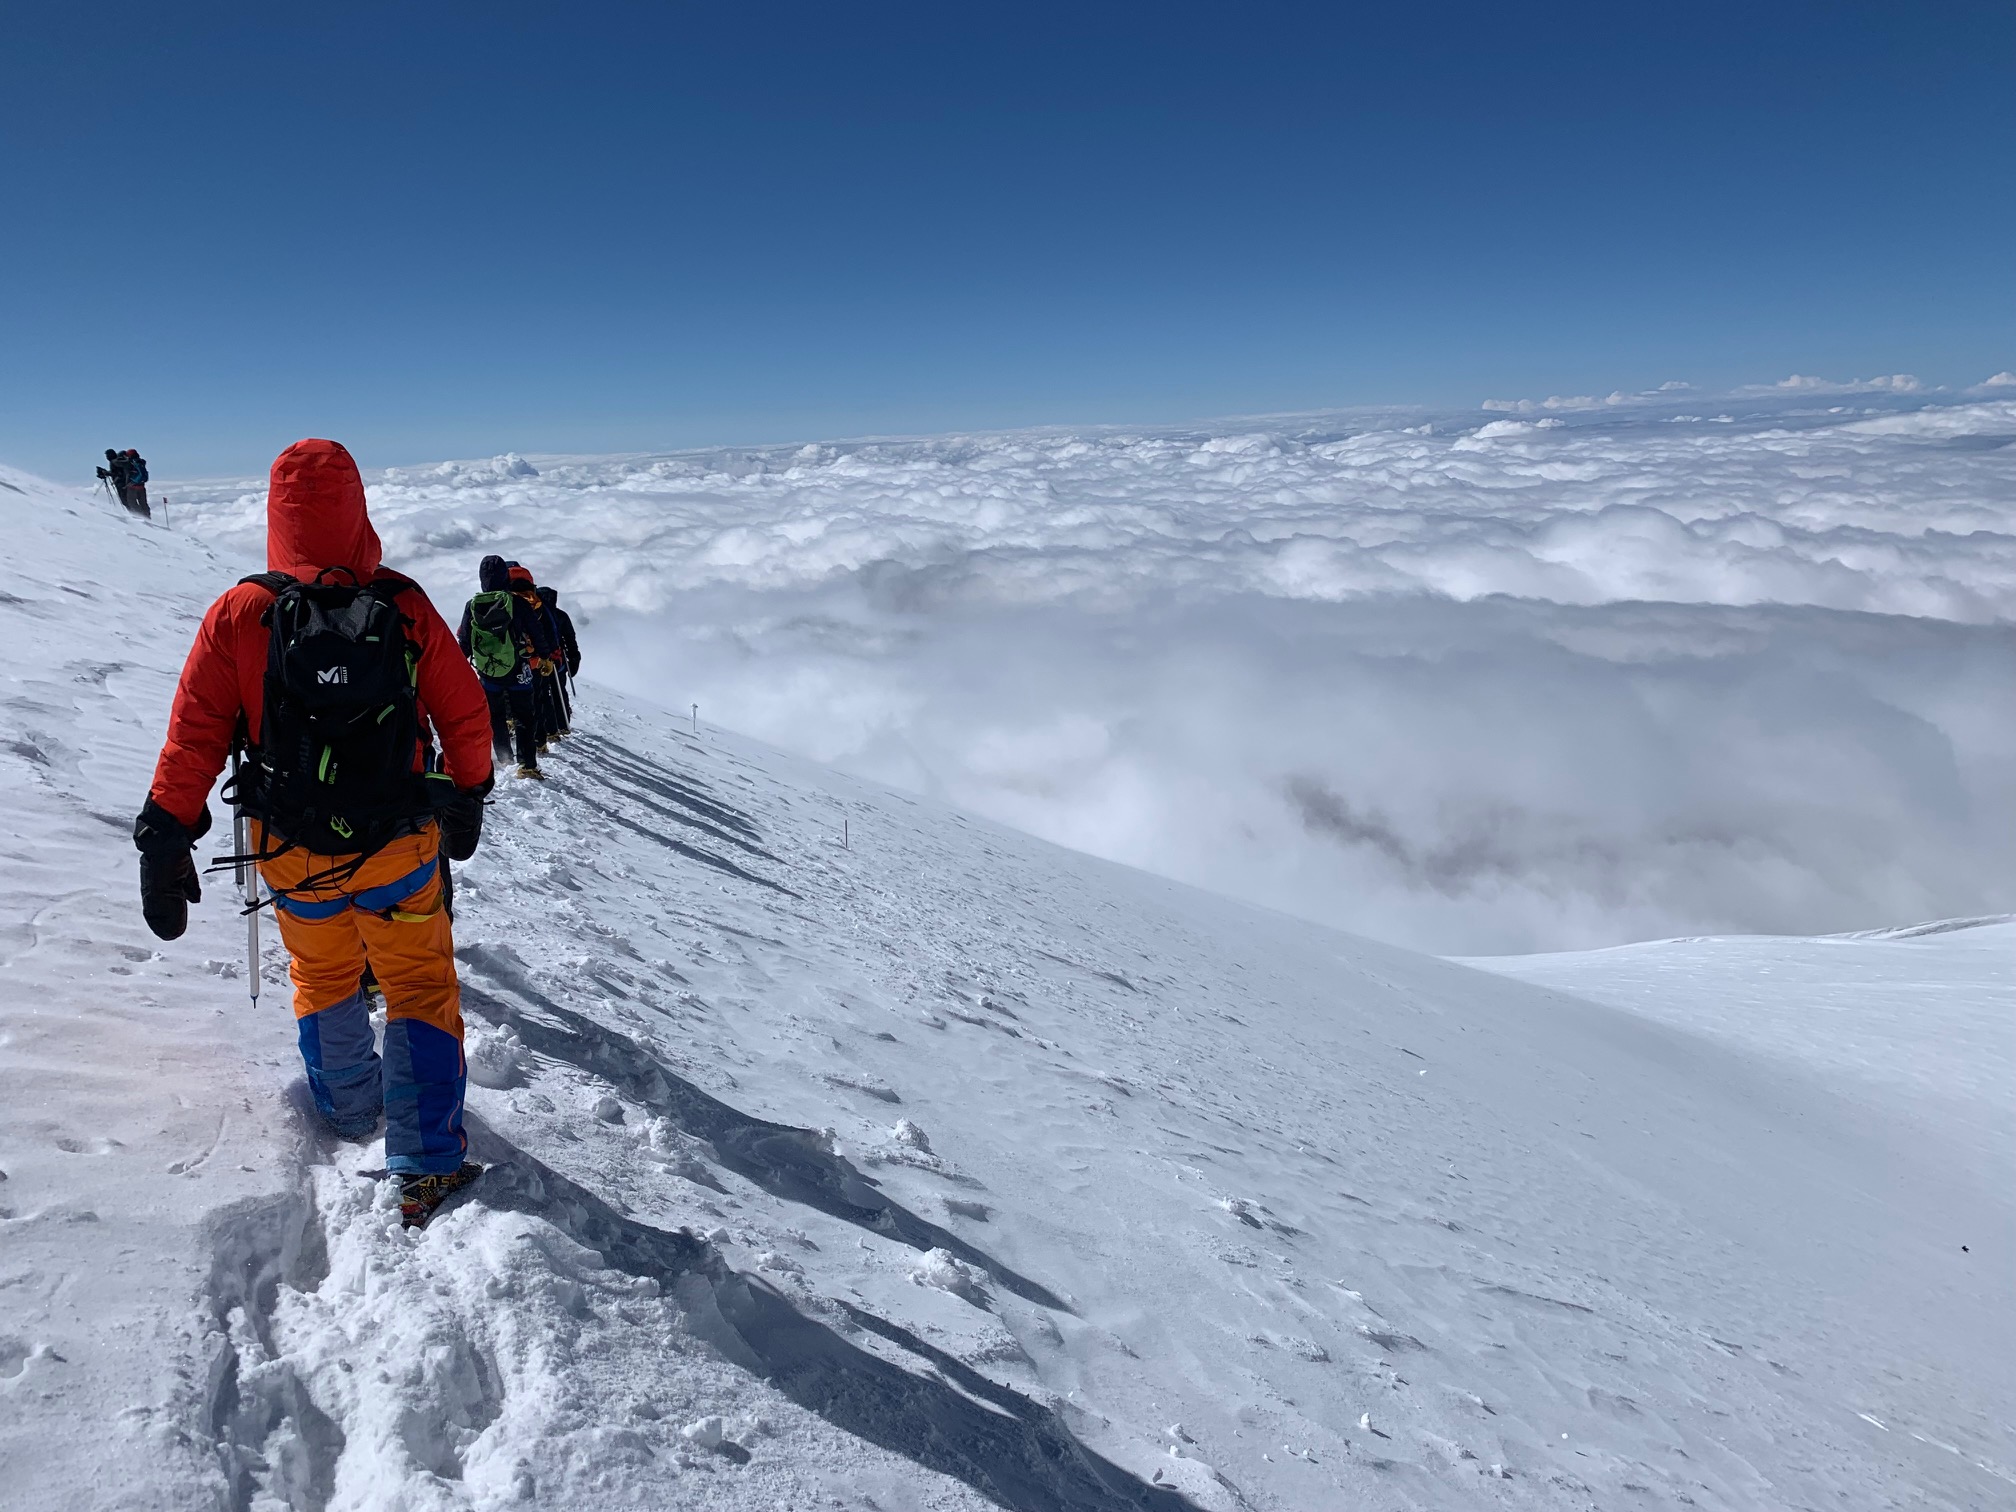 Heading back down Mount Elbrus